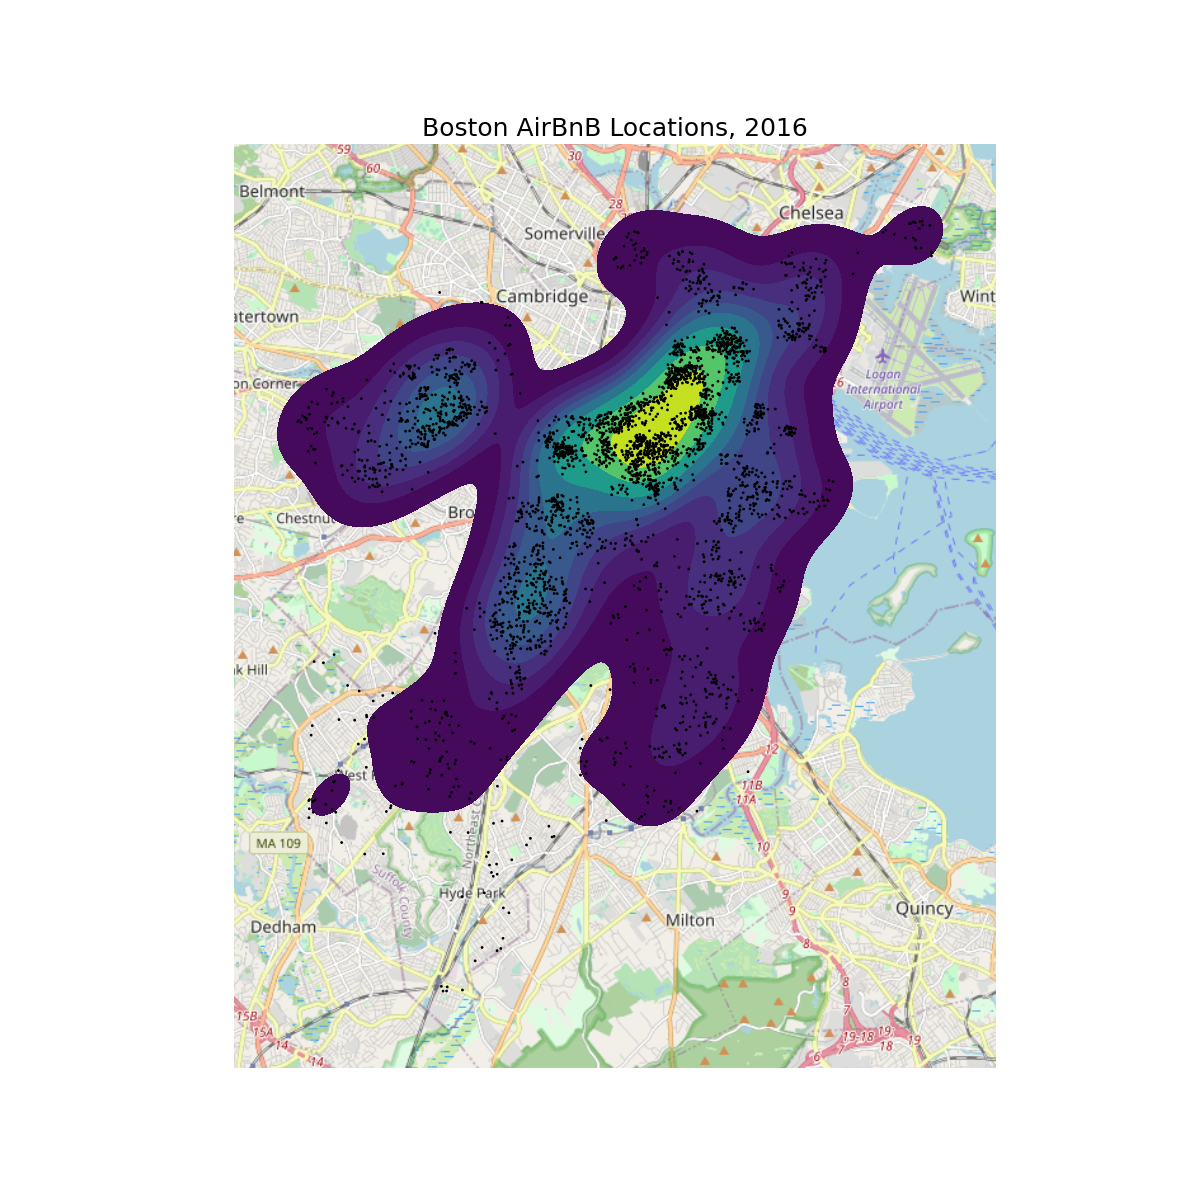 Boston AirBnB Locations, 2016